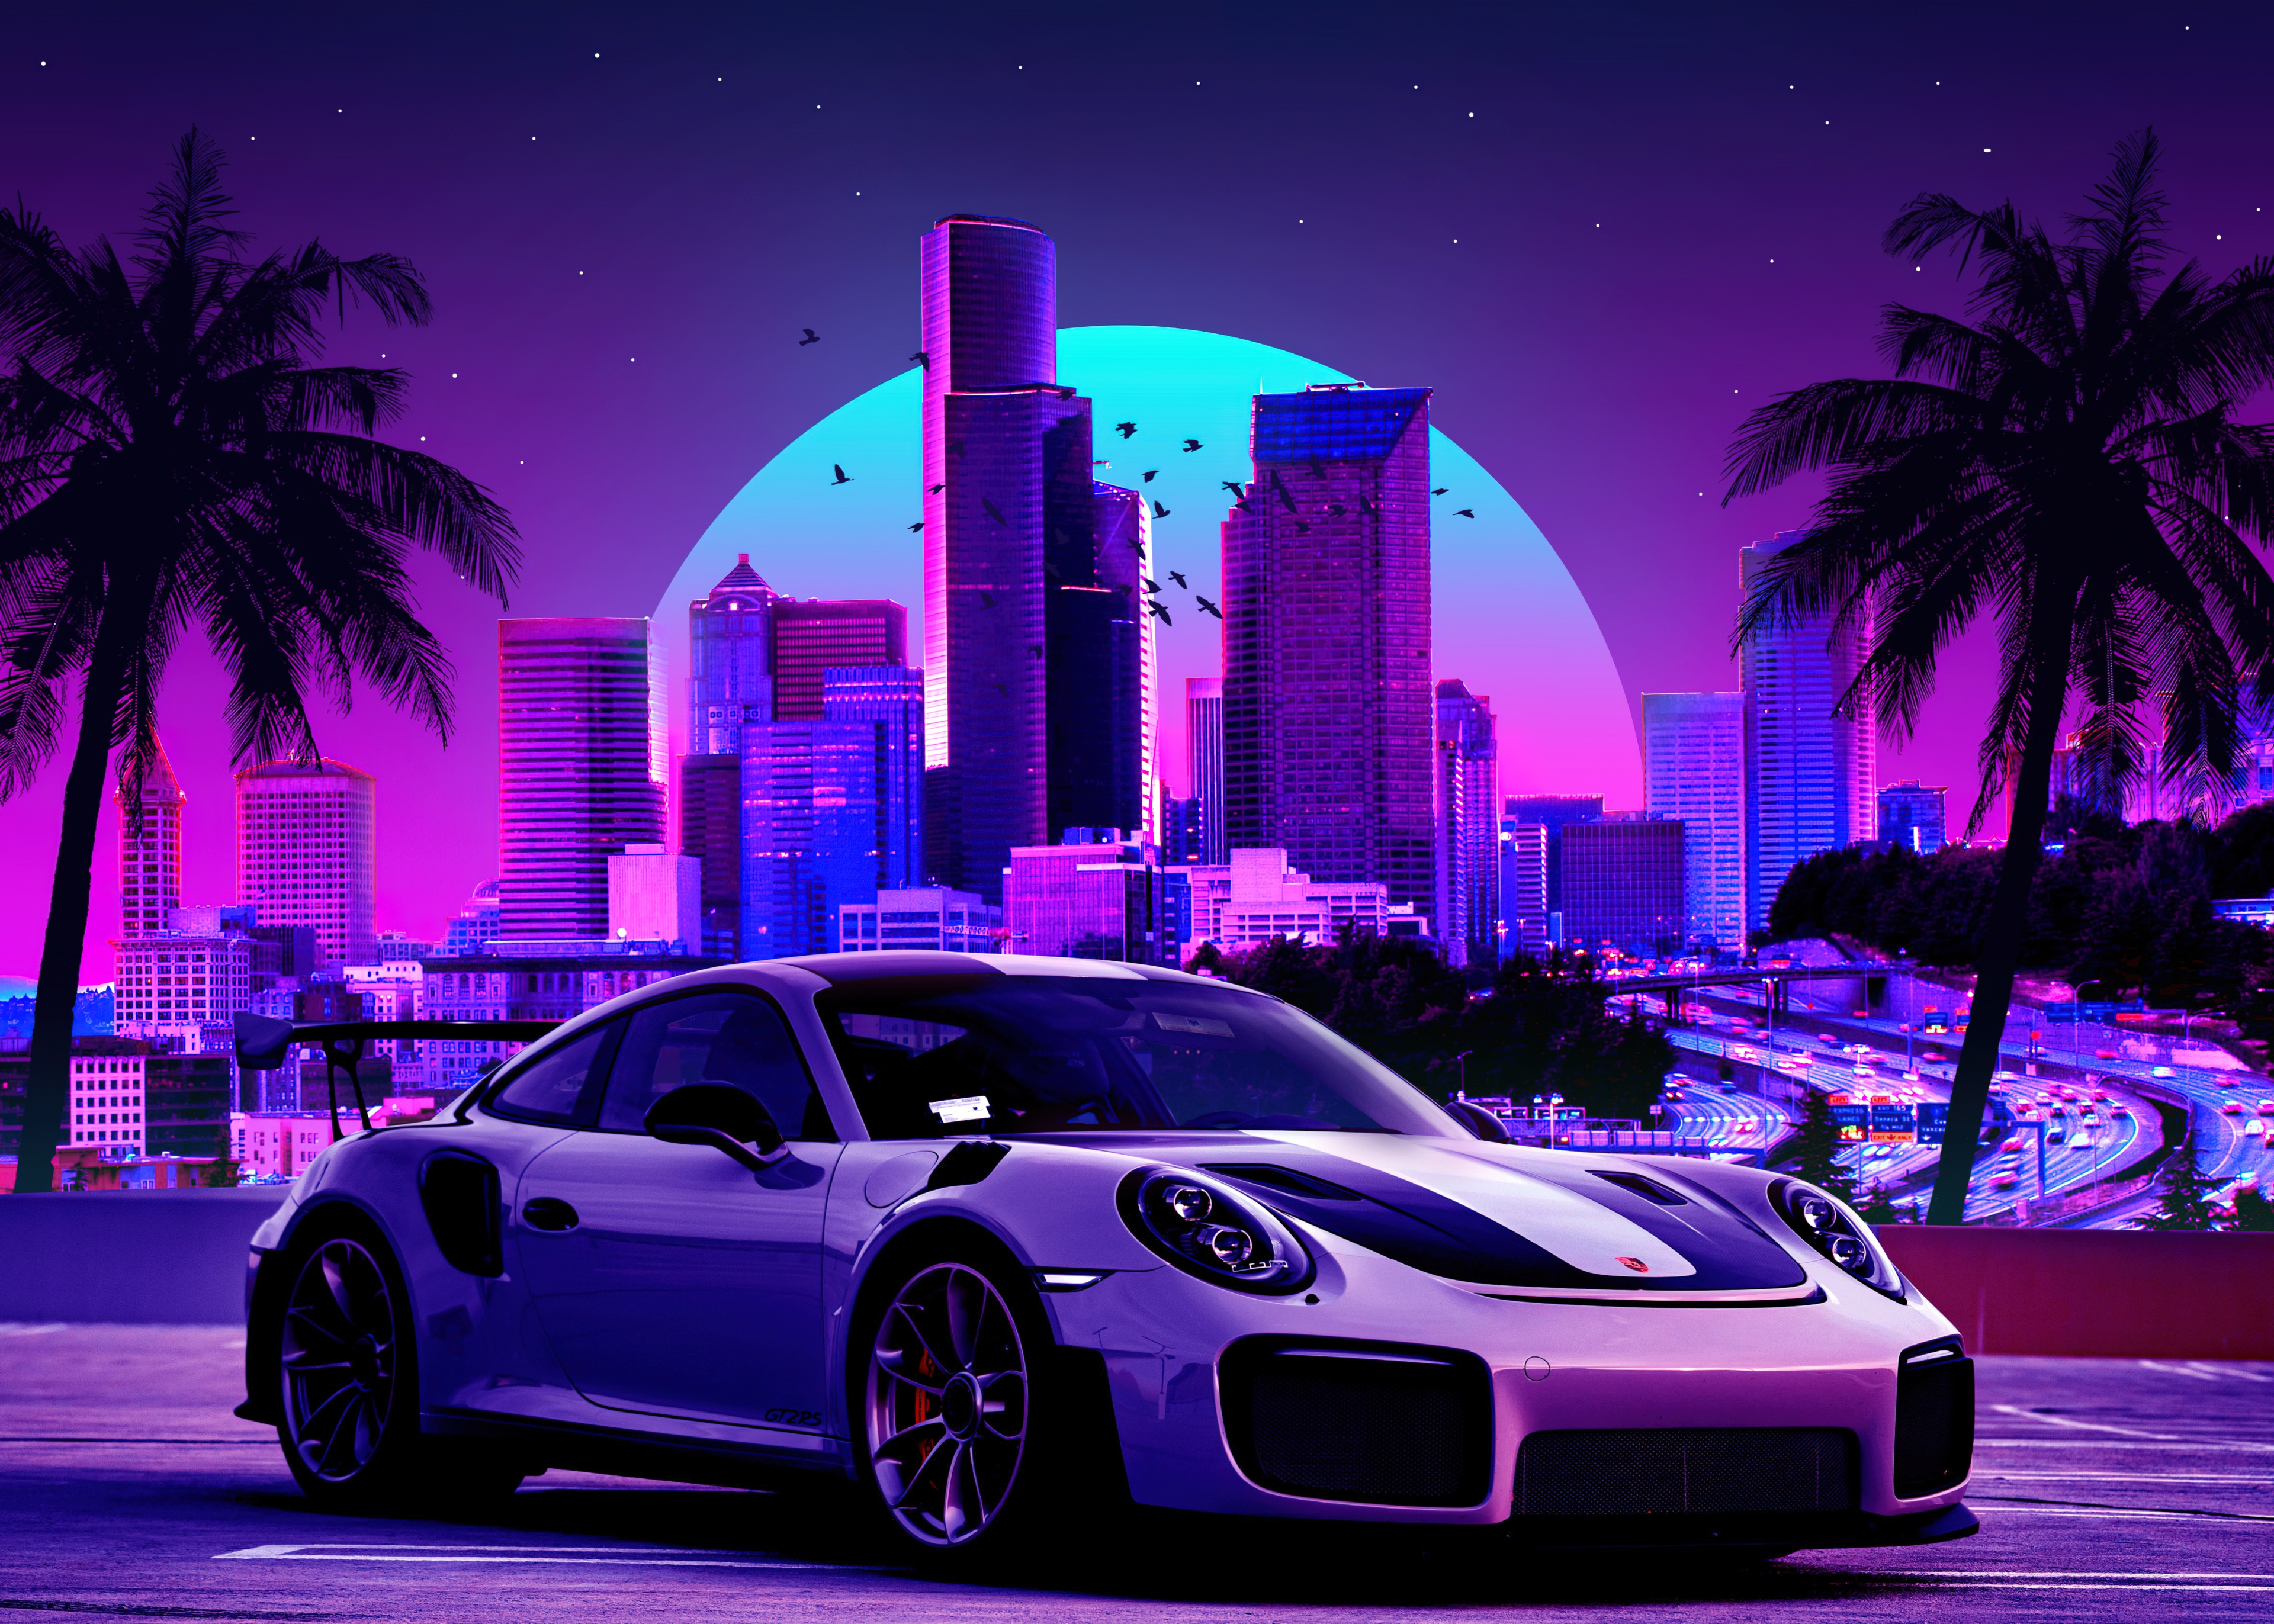 HD wallpaper, Cyberpunk, Cityscape, Porsche 911 Gt2, Synthwave, Outrun, Neon, Retro, Vaporwave